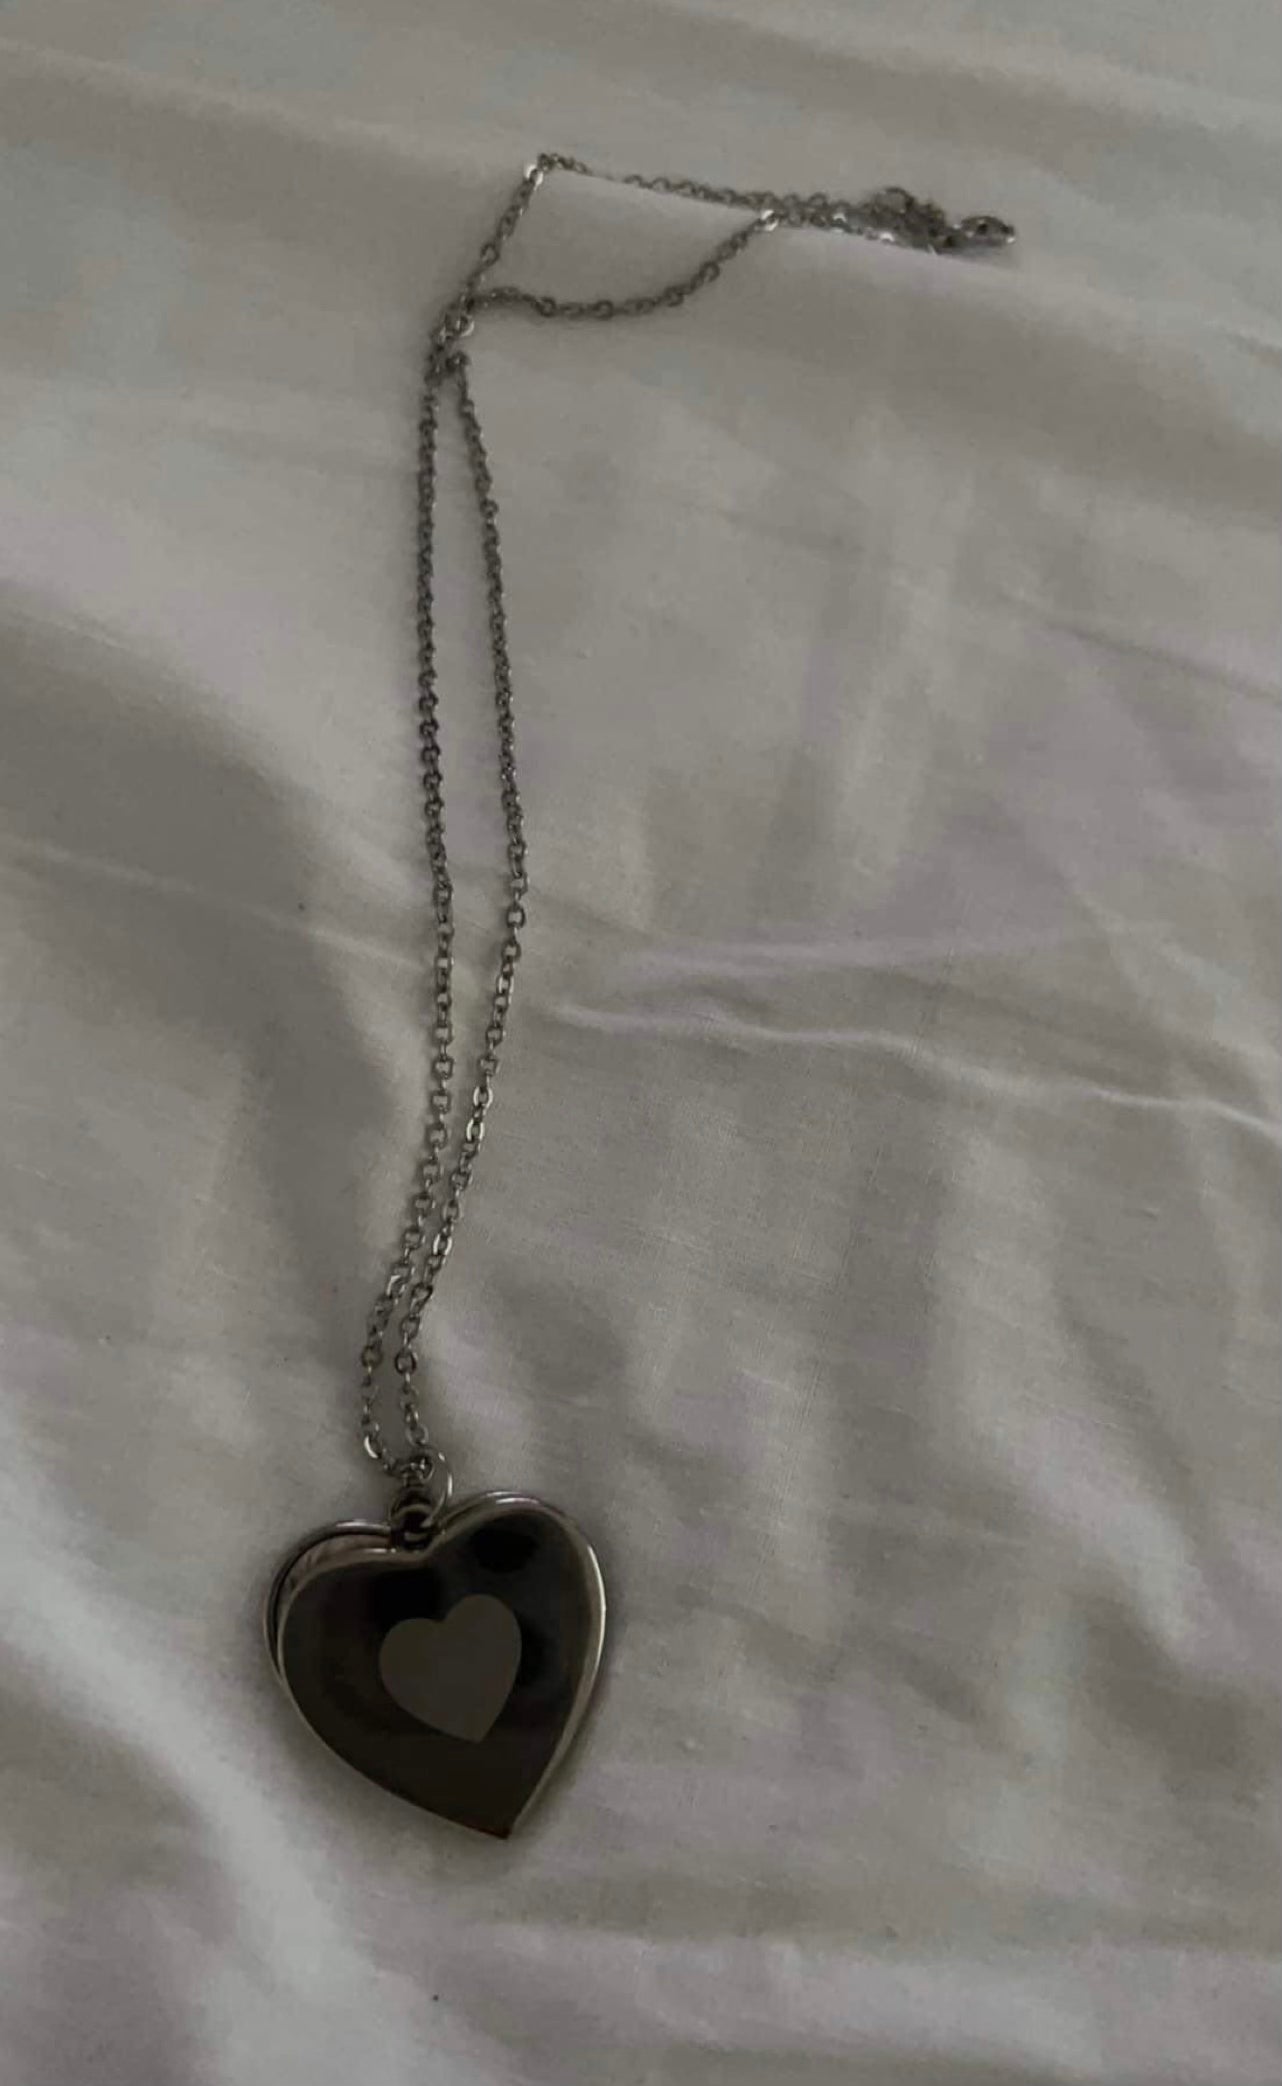 Jewellery - Necklace - Heart Locket with Hidden Photo